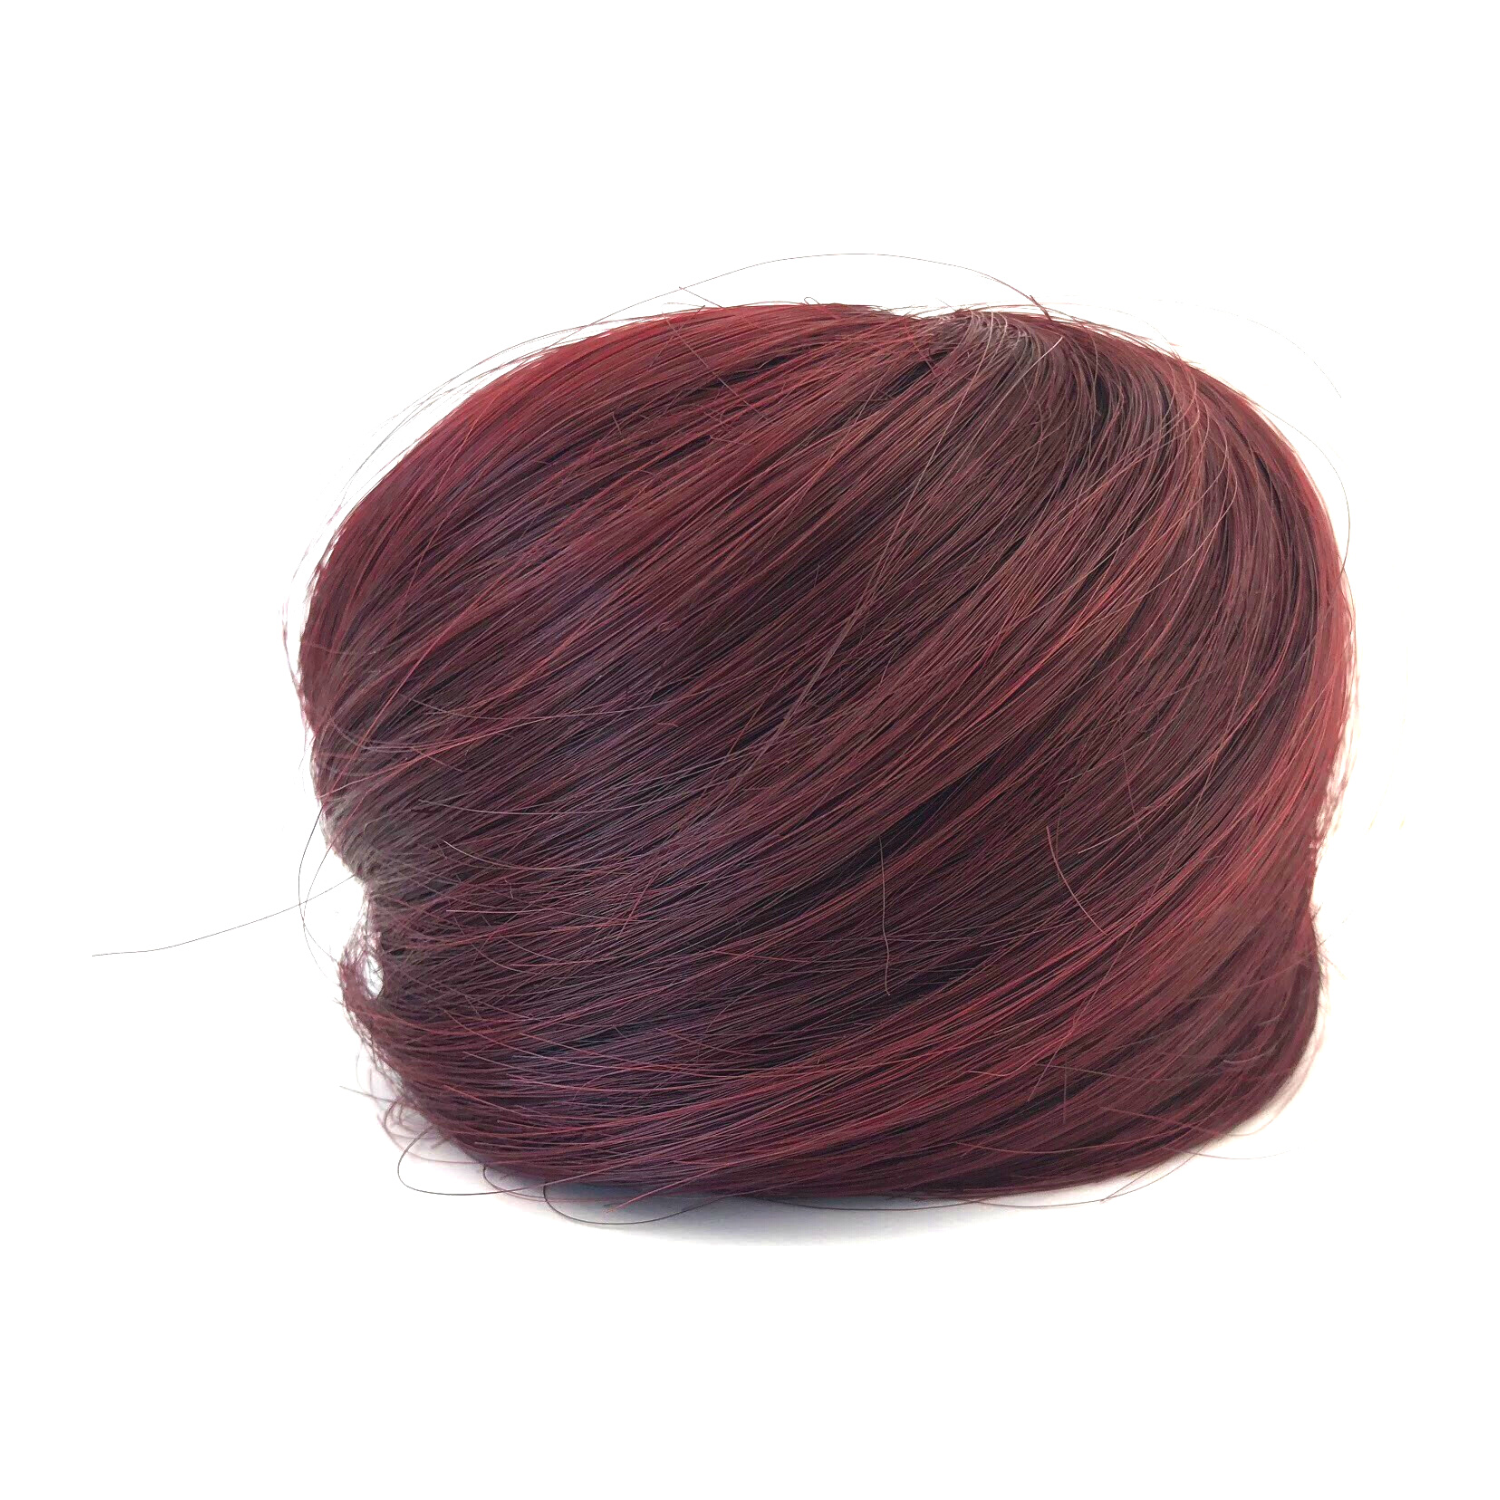 image of hair rehab london clip on bun hairpiece in shade burgundy